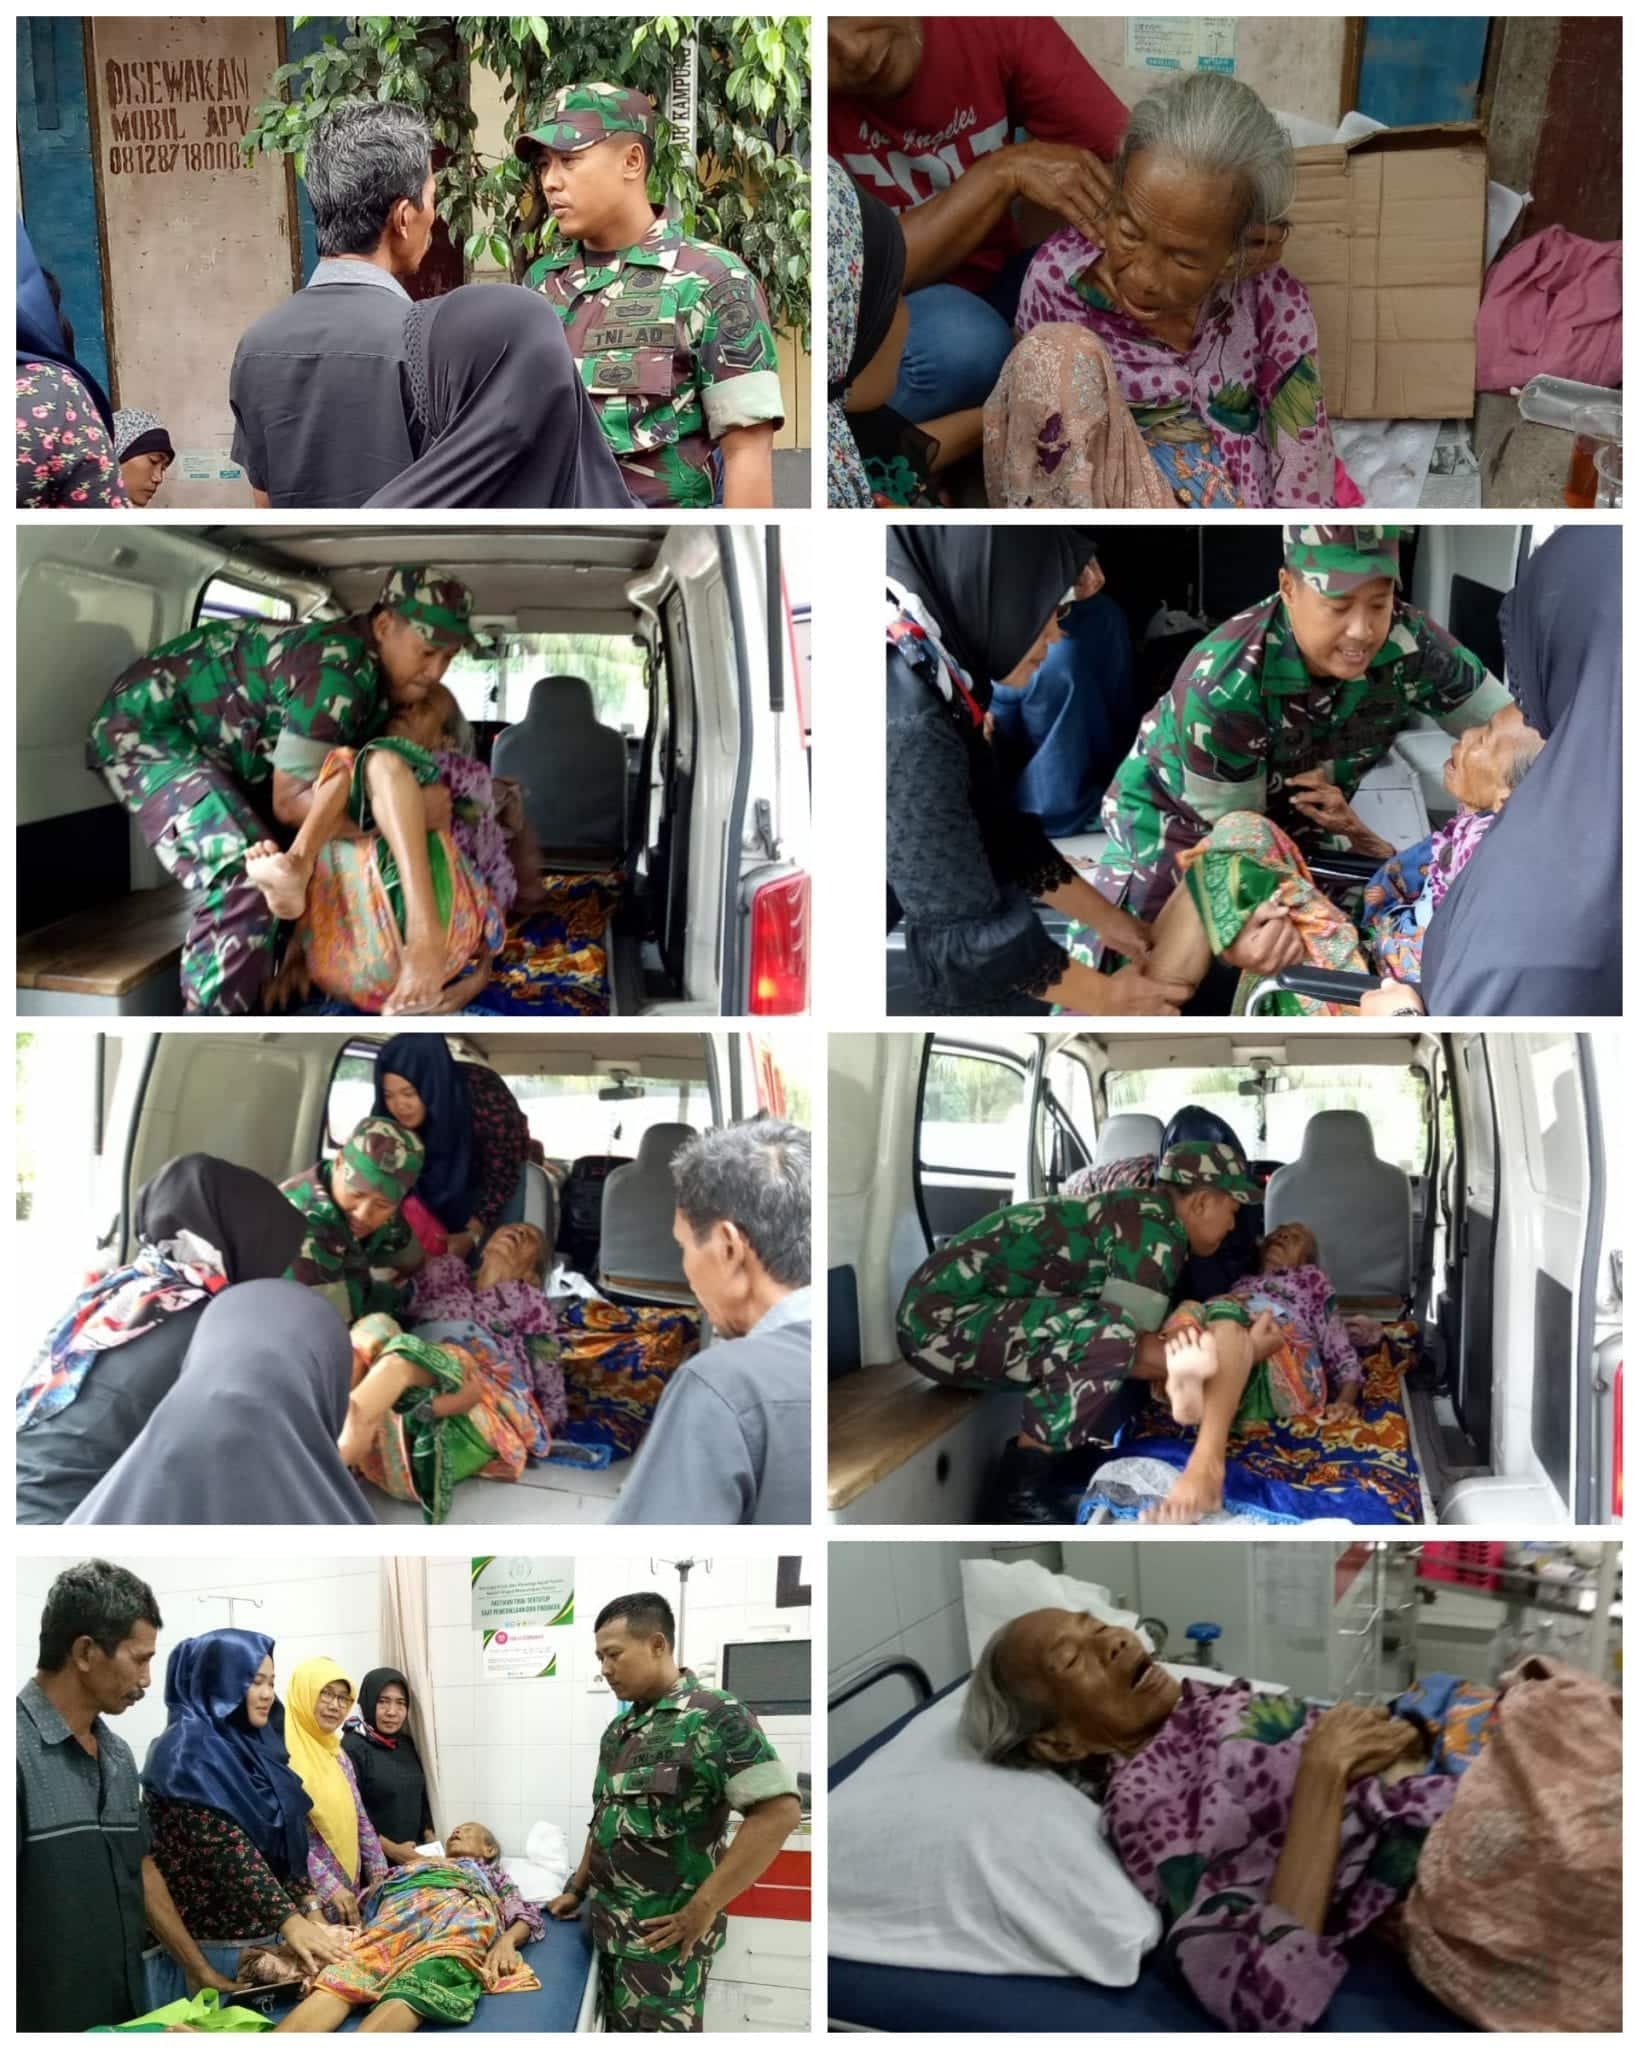 Pingsan di Pinggir Jalan, Nenek Pengemis Dievakuasi Sertu Iswanto ke Rumah Sakit Sari Asih